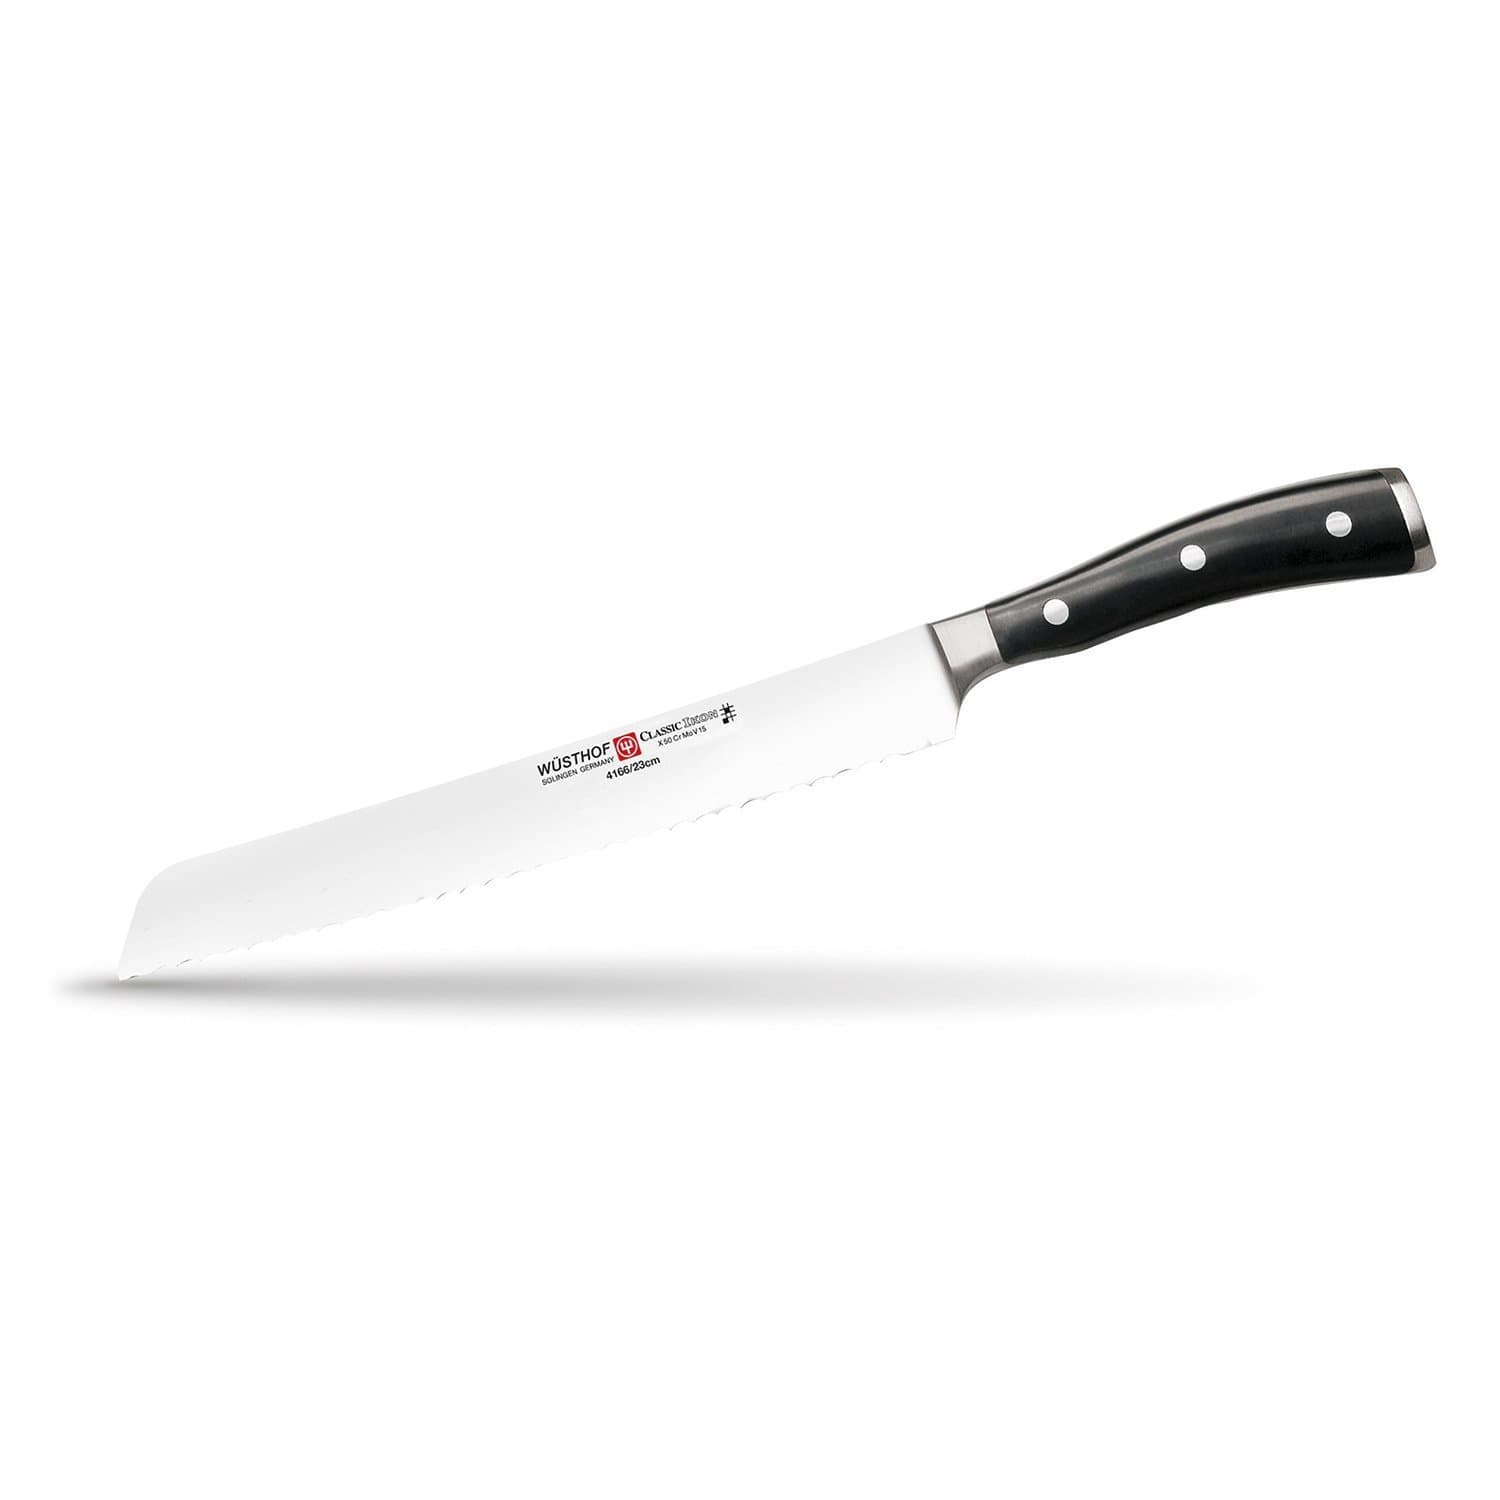 Wusthof كلاسيك ايكون سكين الخبز - الأسود والشظية - 827845 - Jashanmal الرئيسية